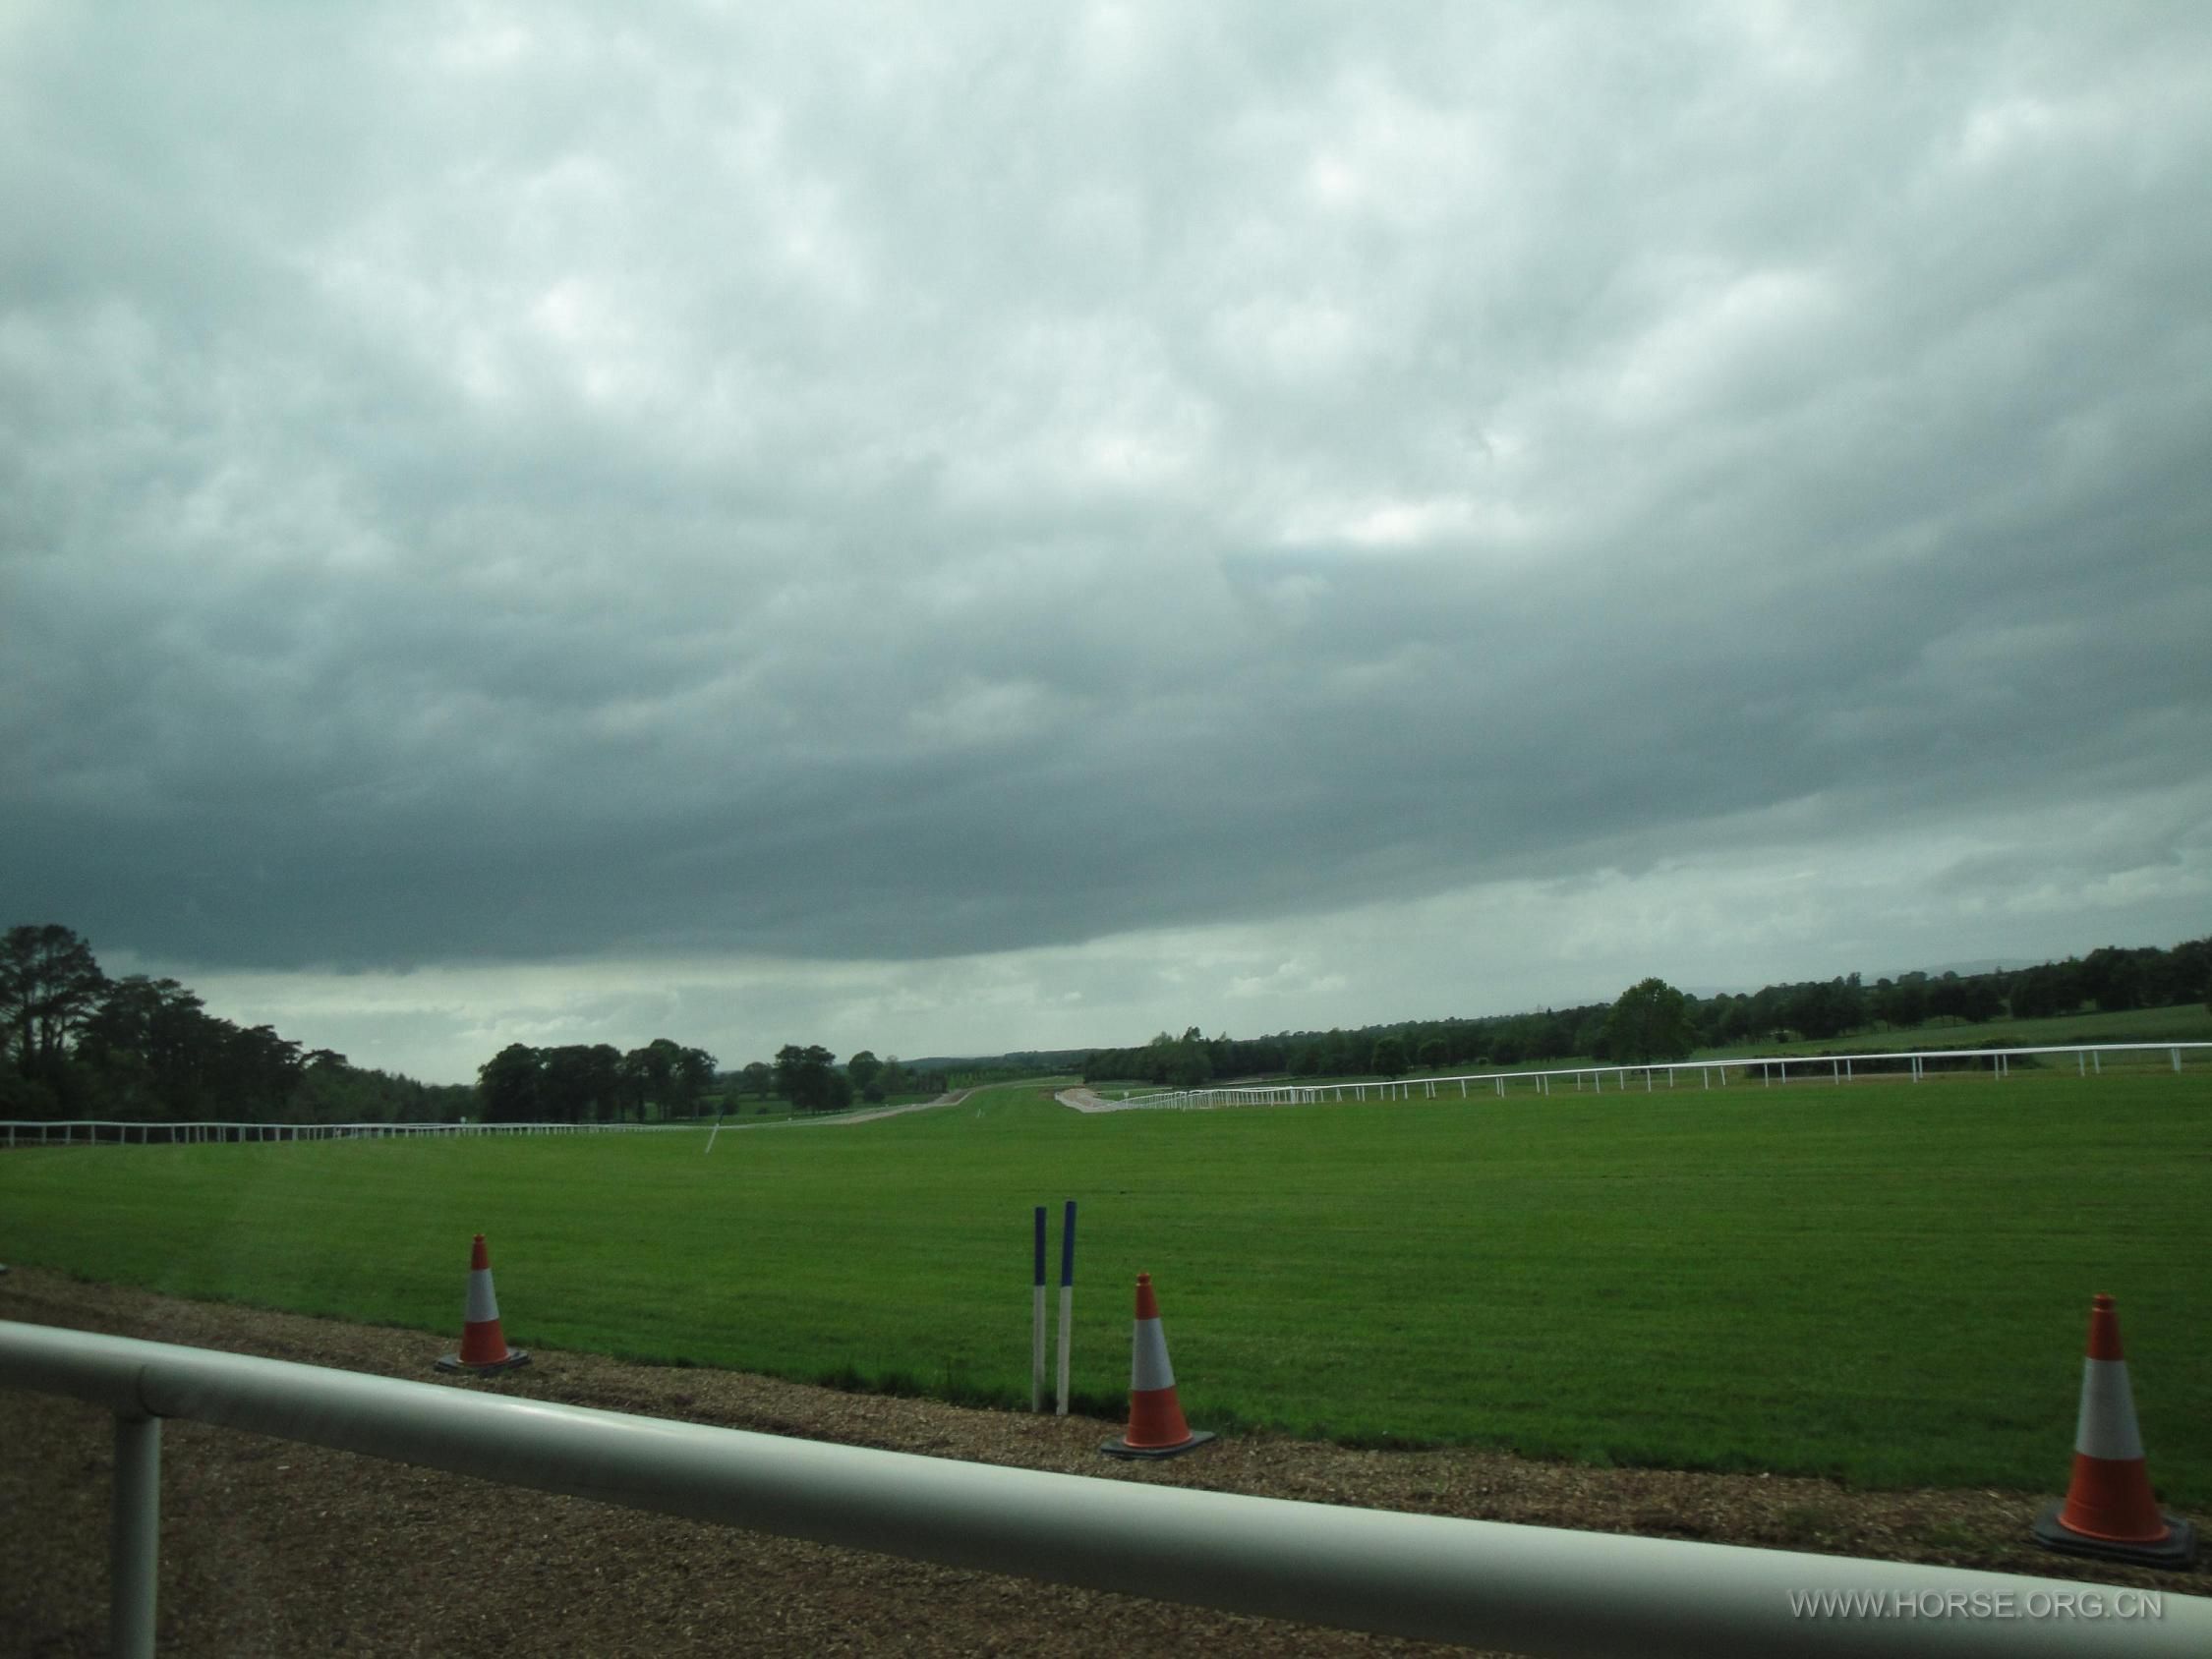 Ballydoyle场地设计全部按照各大赛场跑道拷贝复制，以图让马匹在大赛前尽早适应赛场.JPG ... ... ... ...